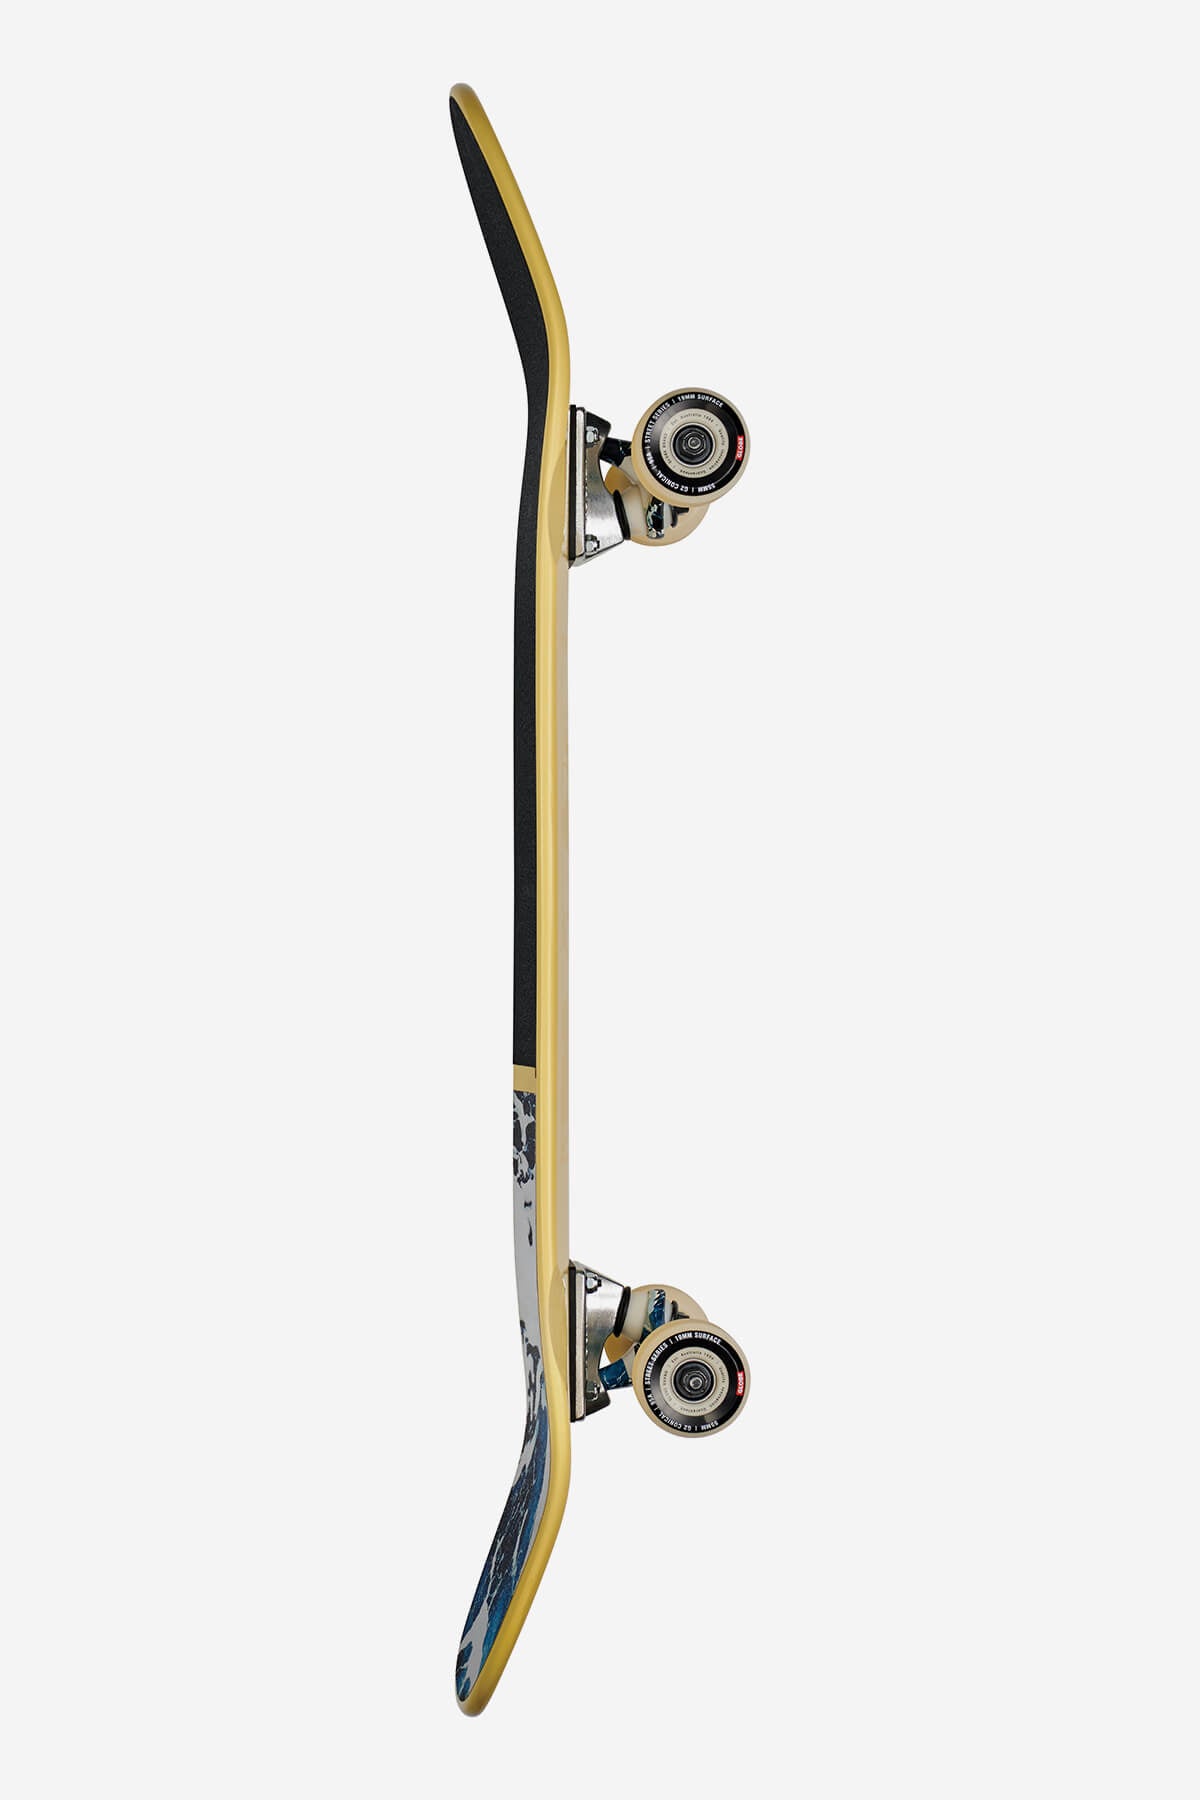 Globe - Shooter - Yellow/Comehell - 8.625" Completo Skateboard